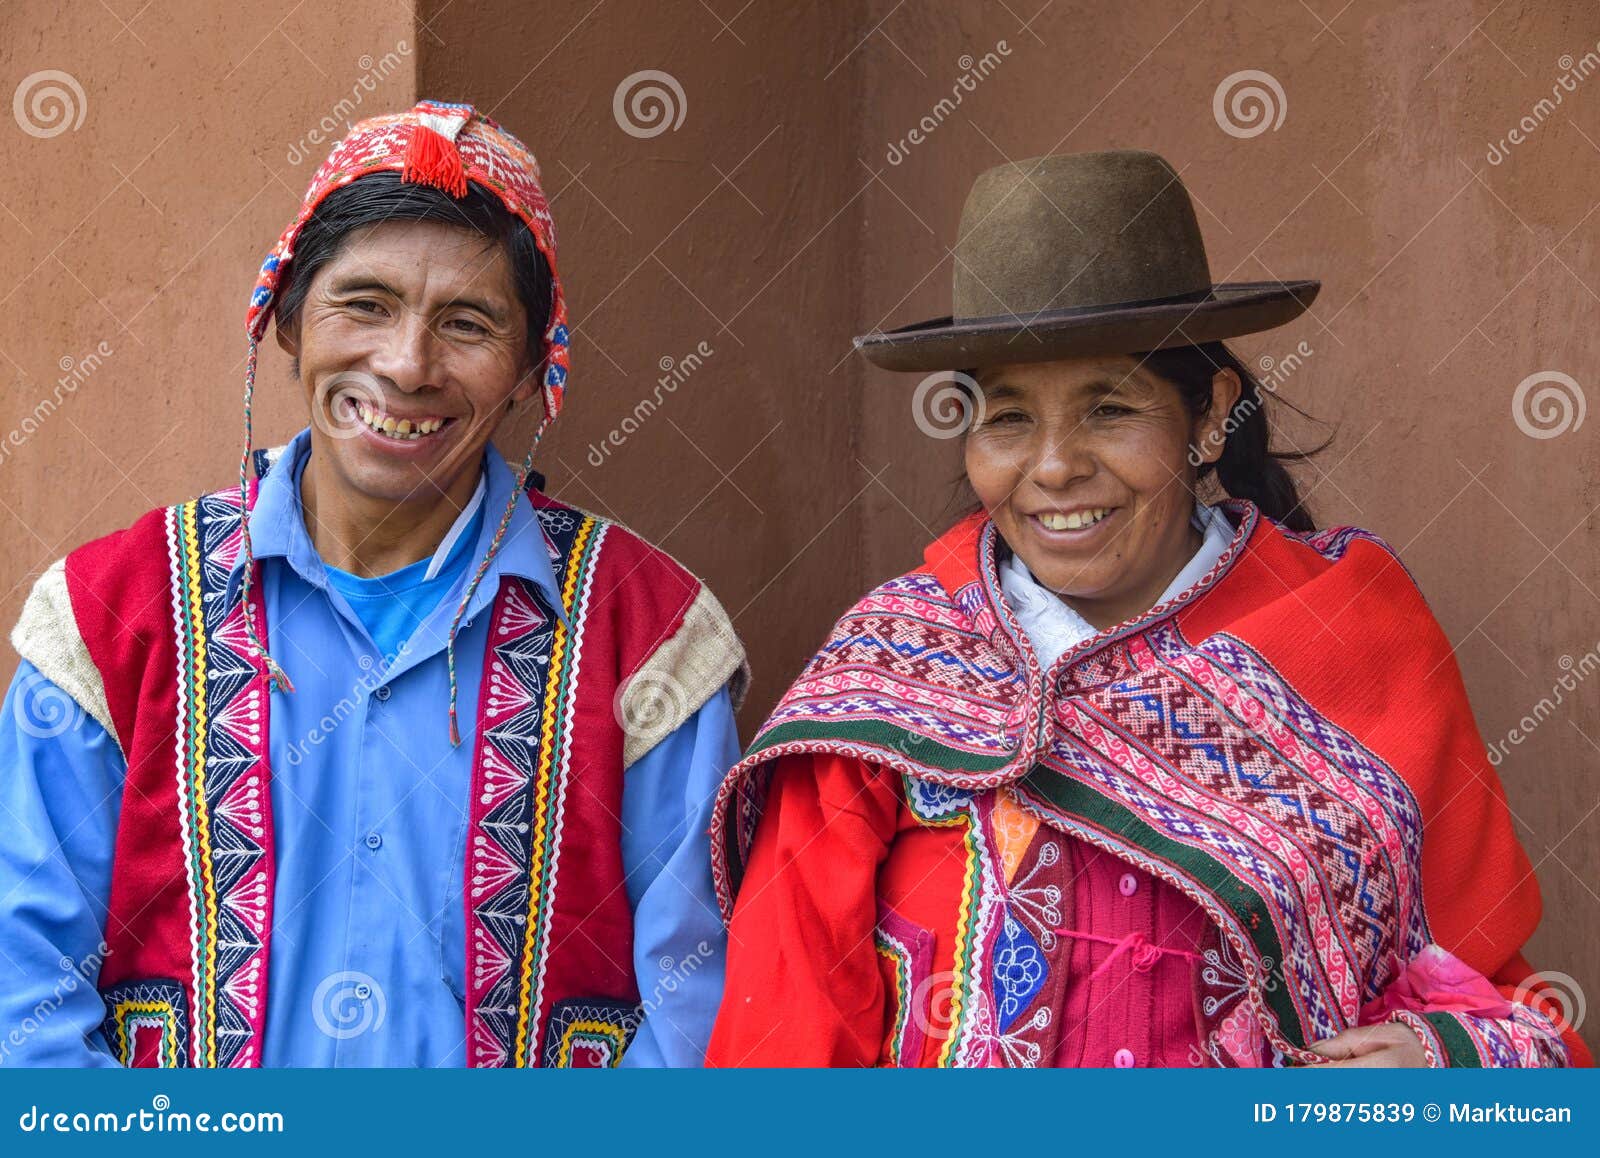 sacred-valley-cusco-peru-oct-indigenous-quechua-man-woman-yachaq-community-janac-chuquibamba-179875839.jpg